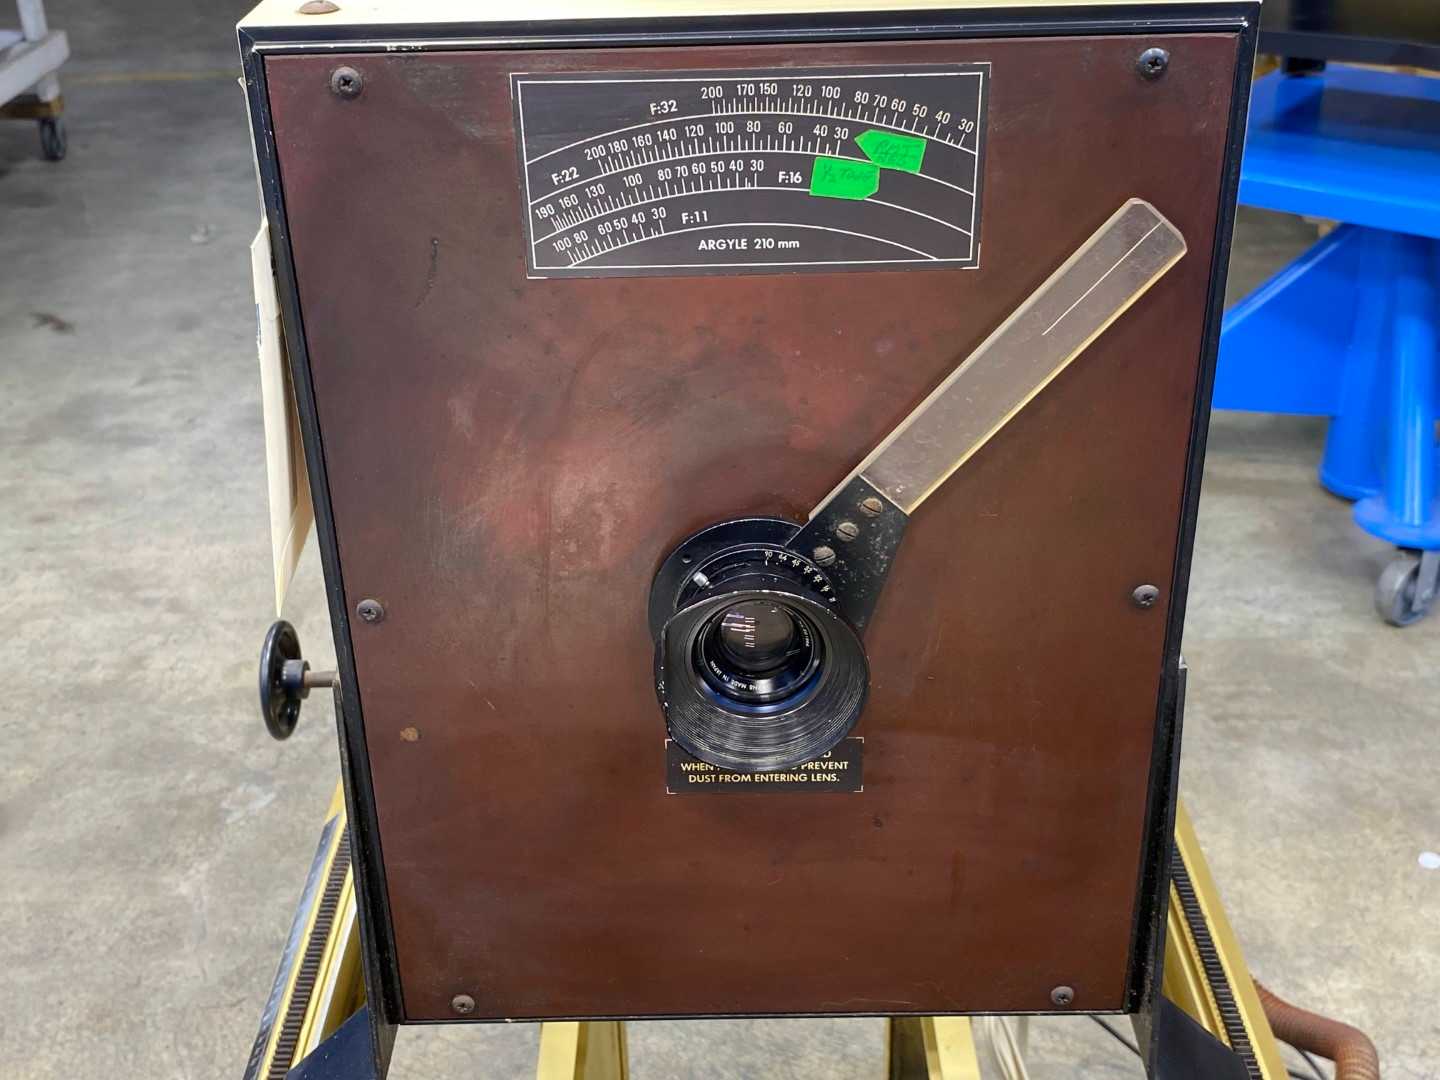 Antique Argyle Timer Model IT 3M  18 Process Camera 